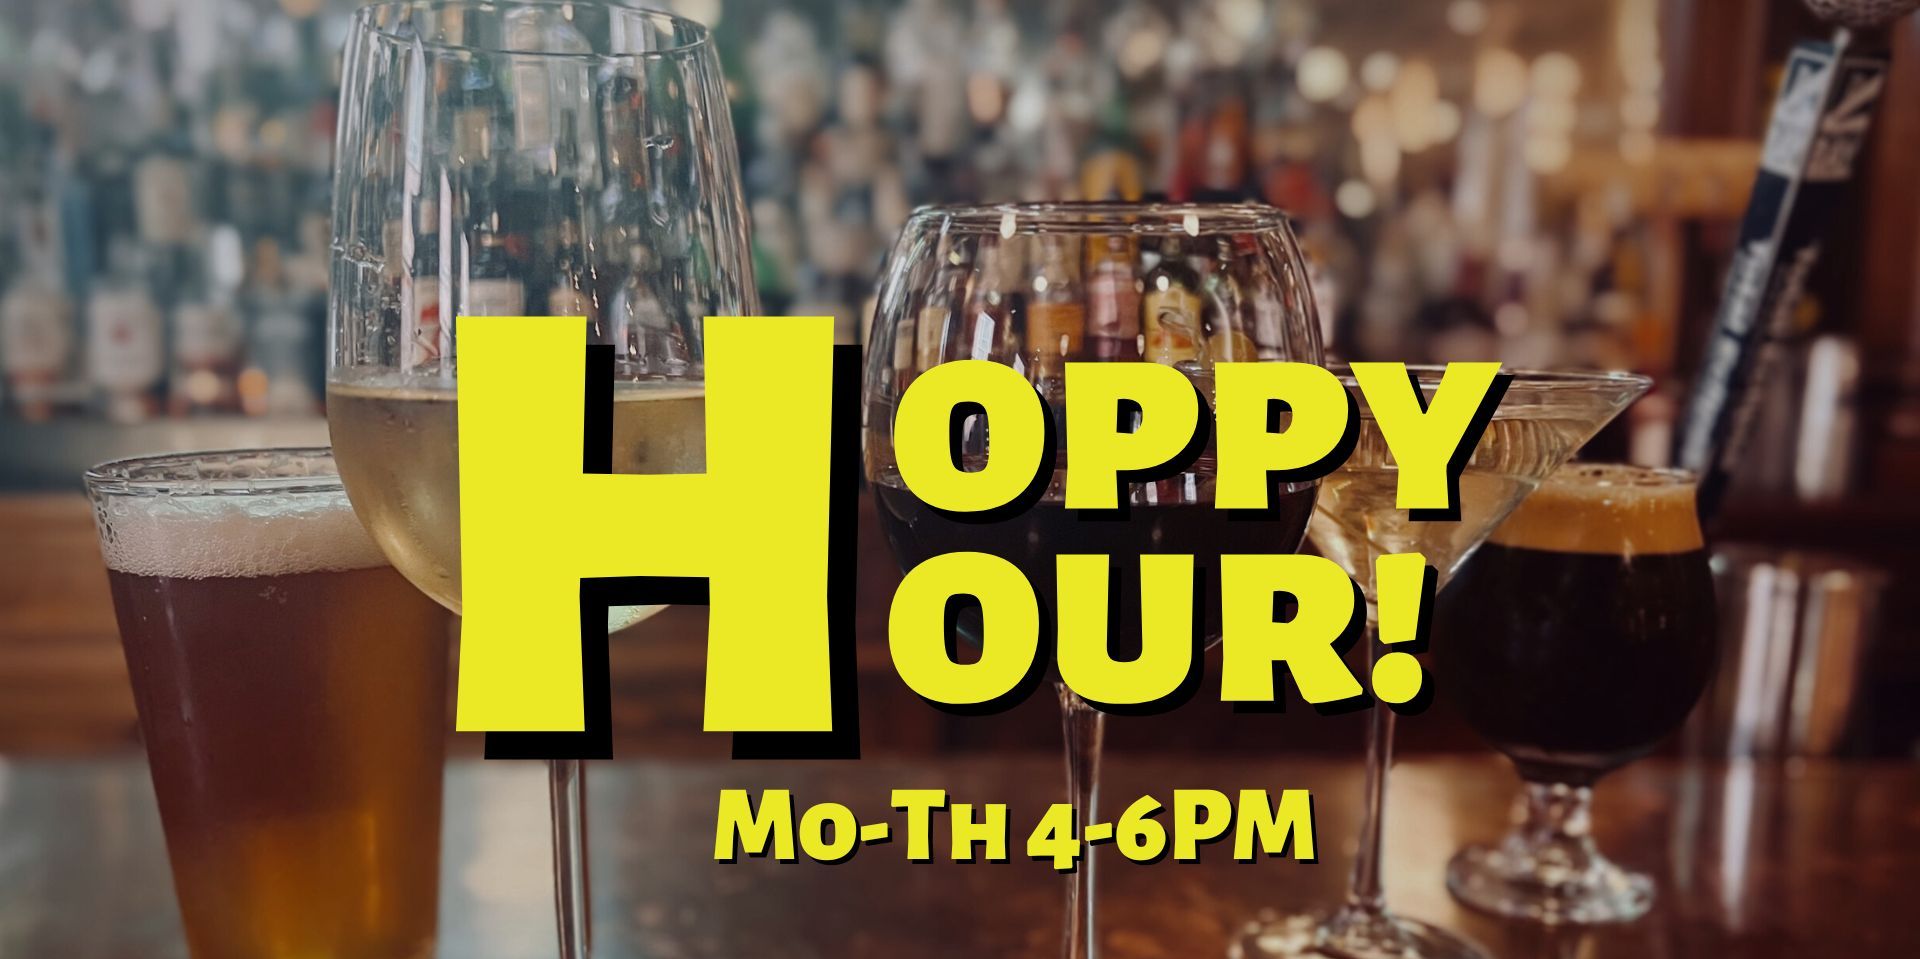 It's Hoppy Hour! promotional image